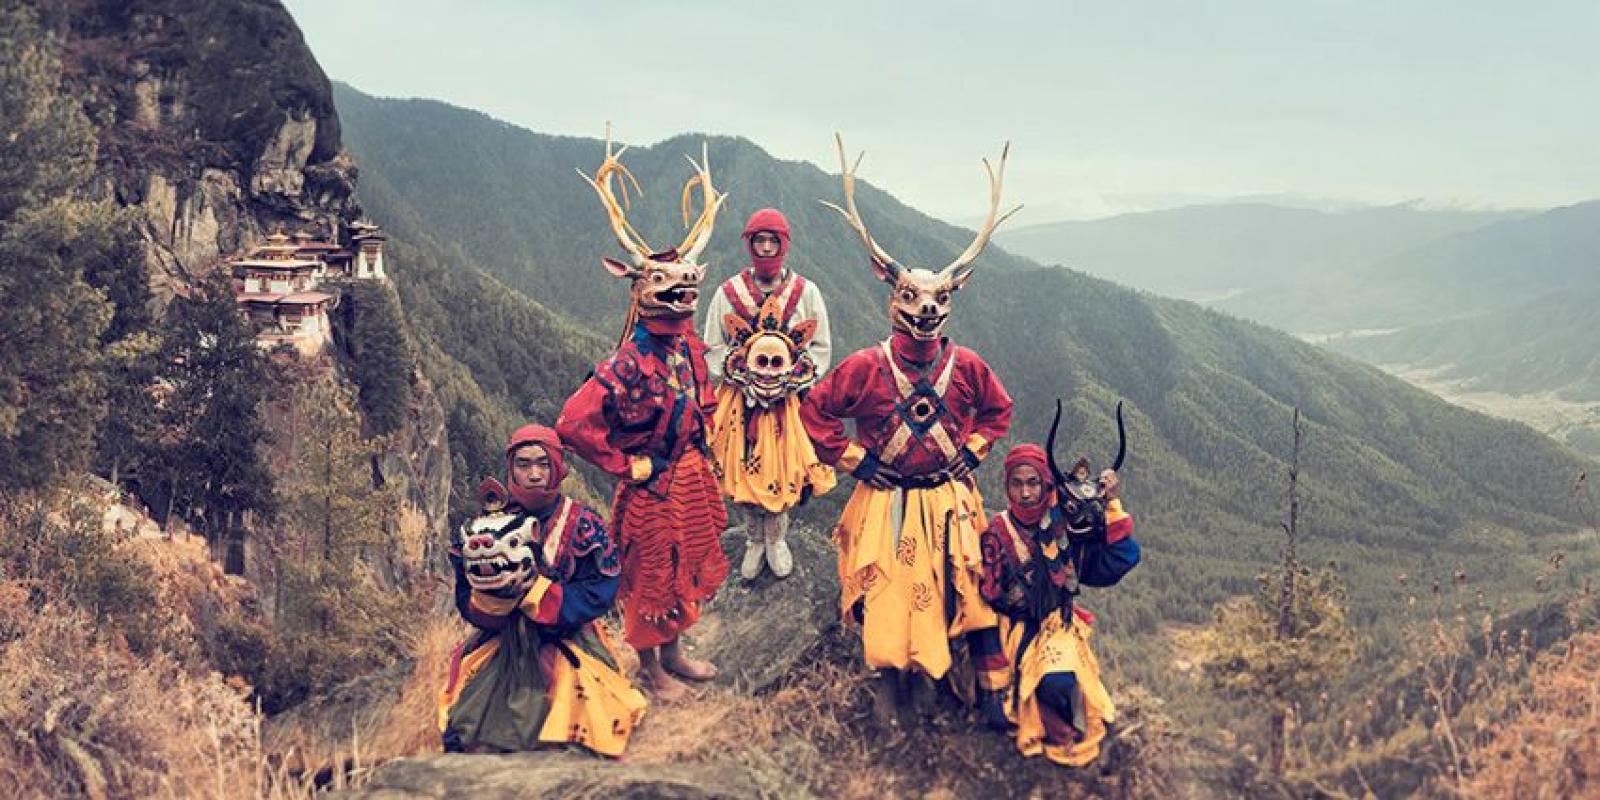 Jimmy Nelson Portrait Photograph - XXIX 3 // XXIX Bhutan (24.41" x 43.31")